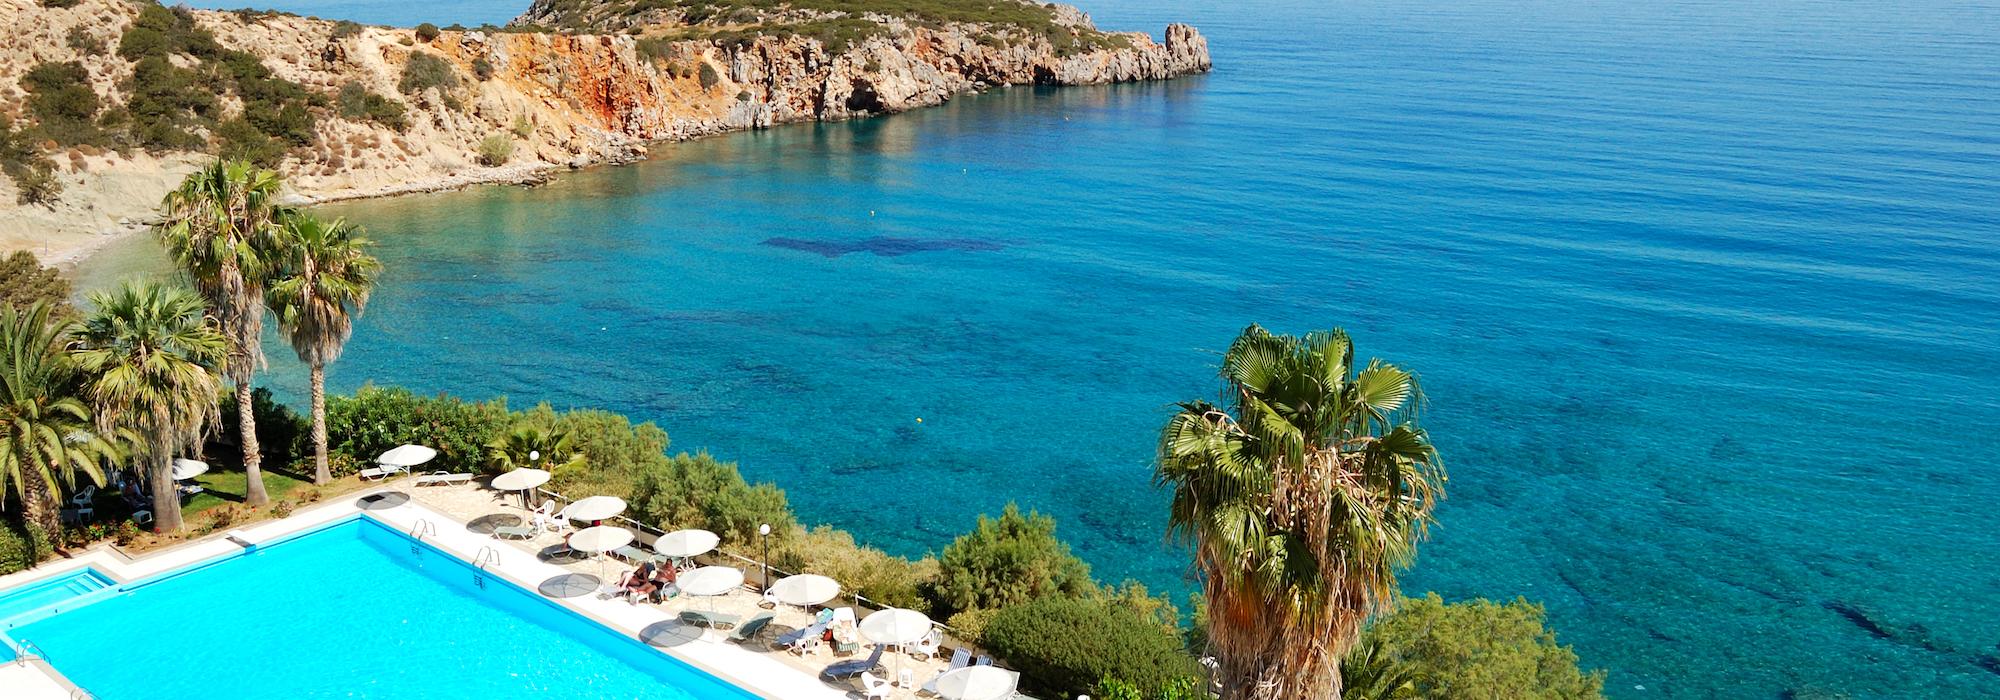 Swimming pool at luxury hotel Crete